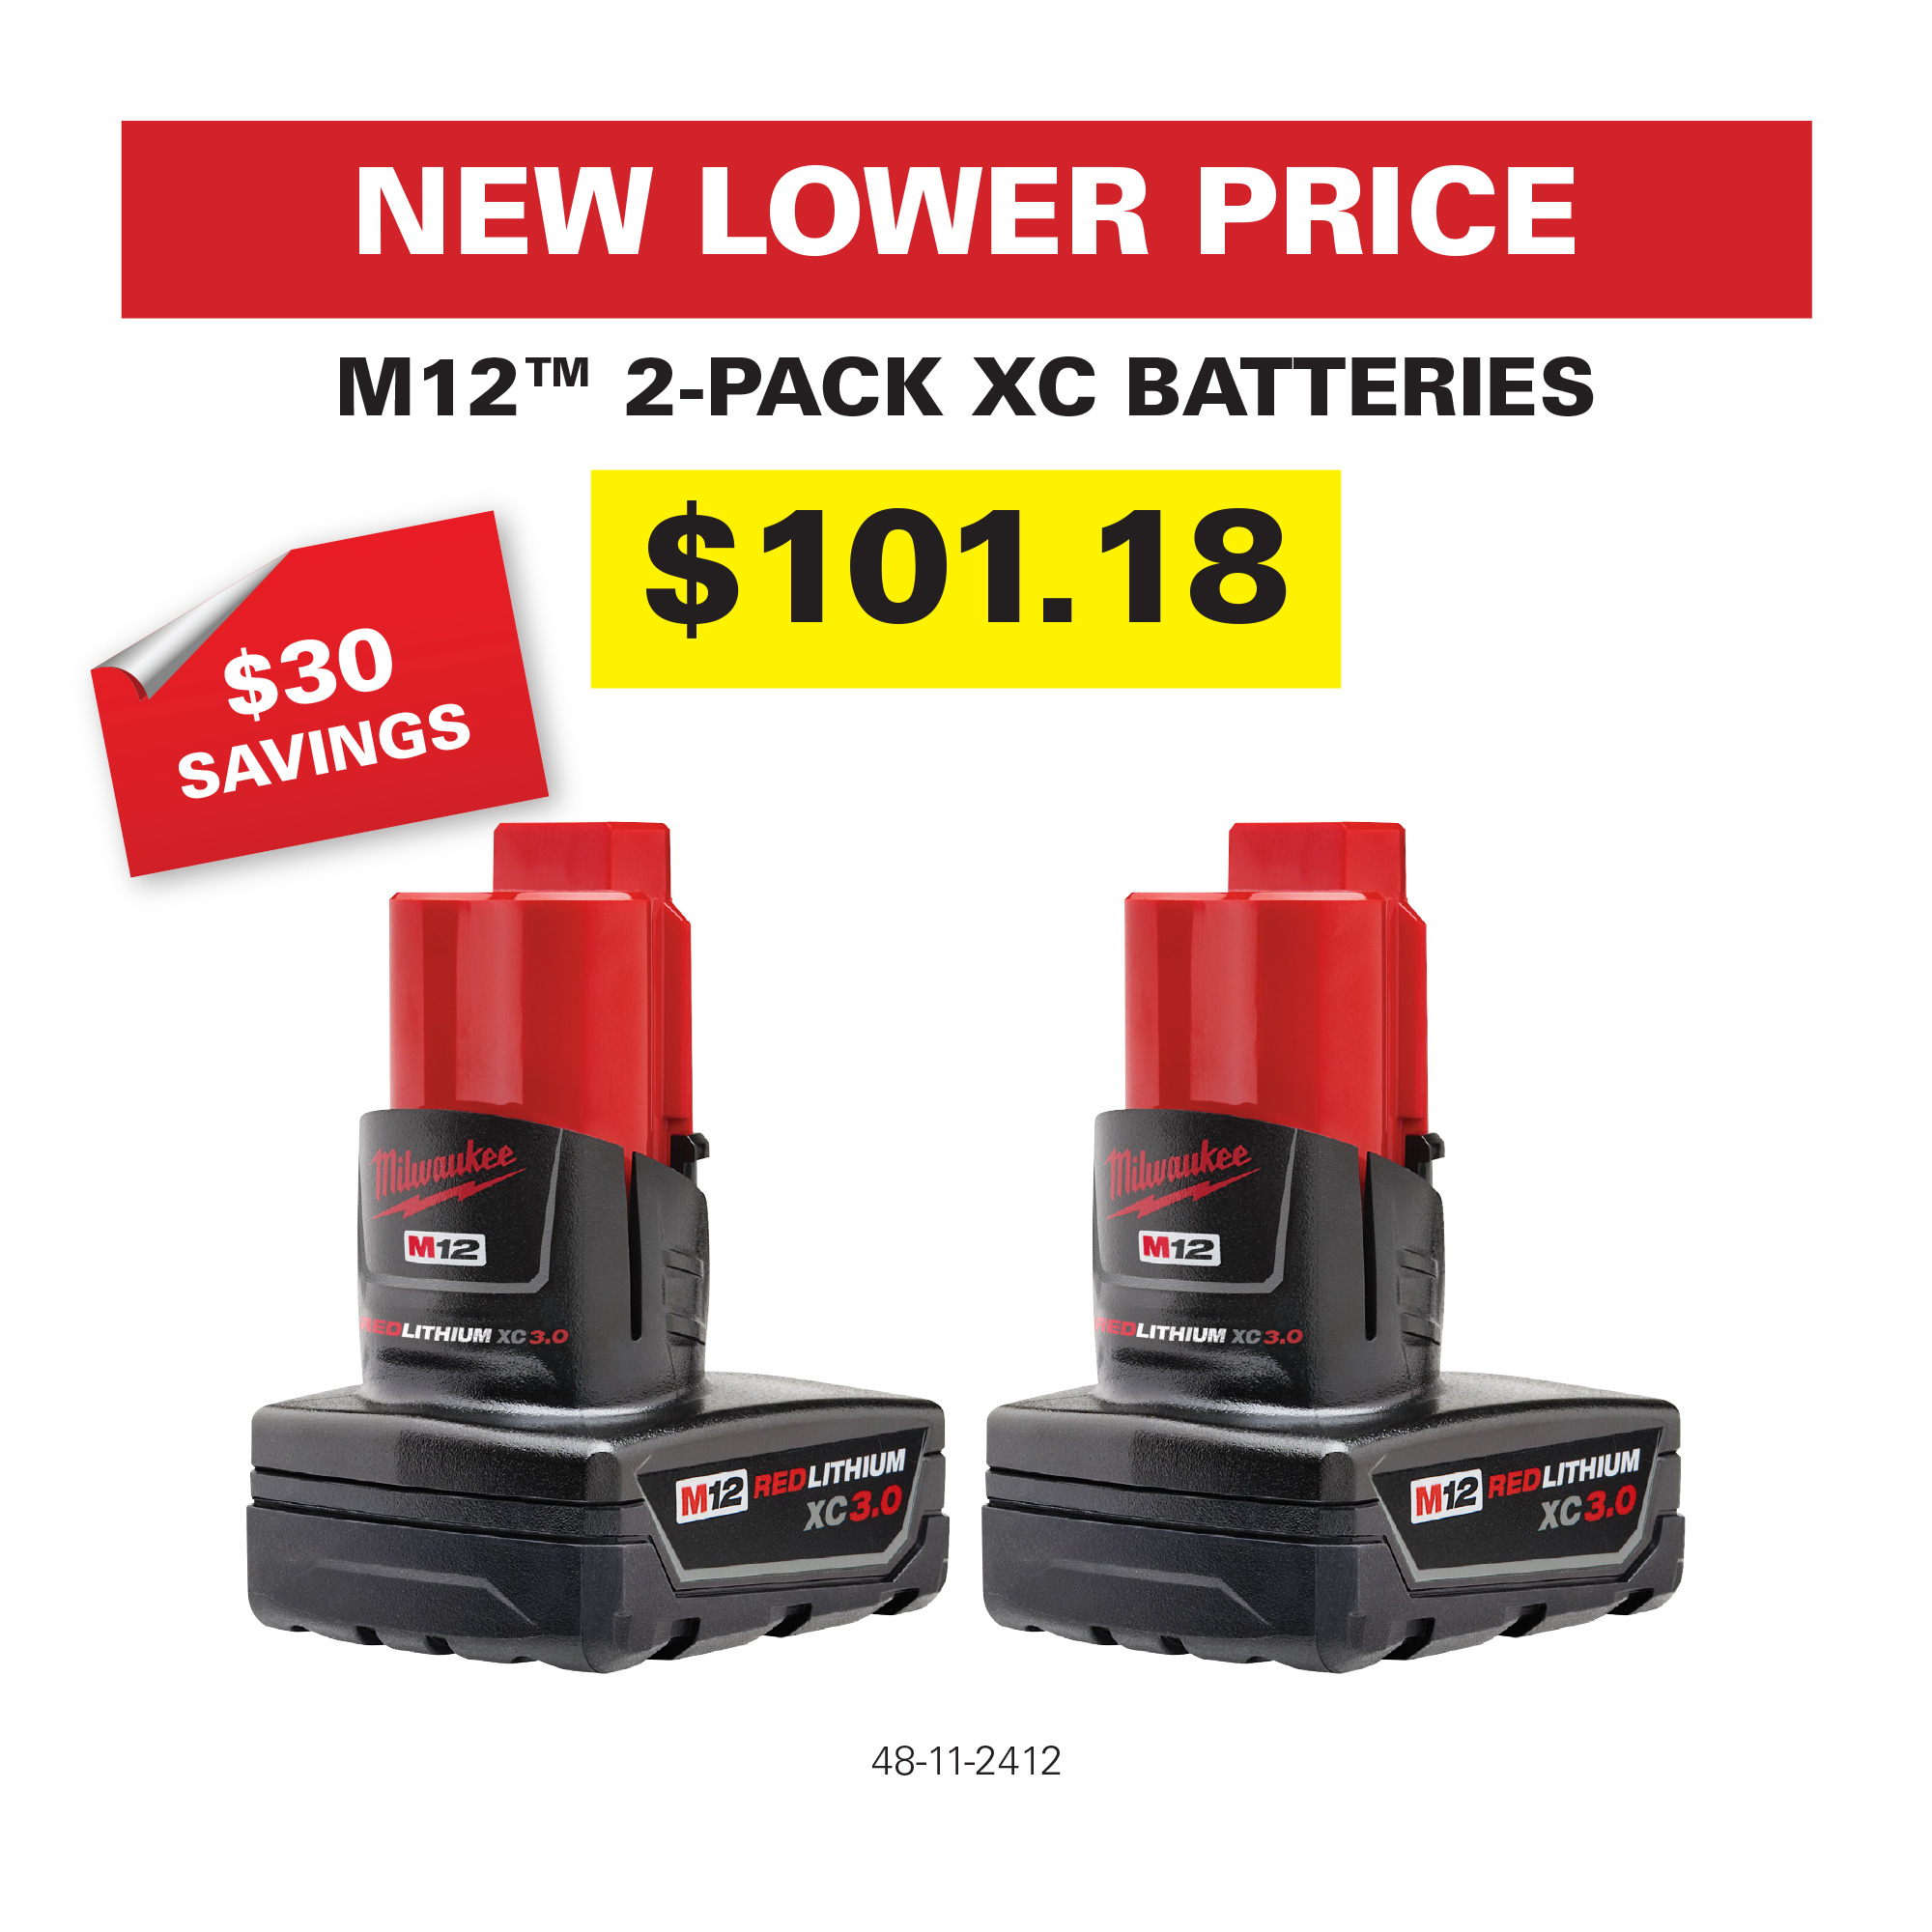 New Lower Price M12 Batteries Promo